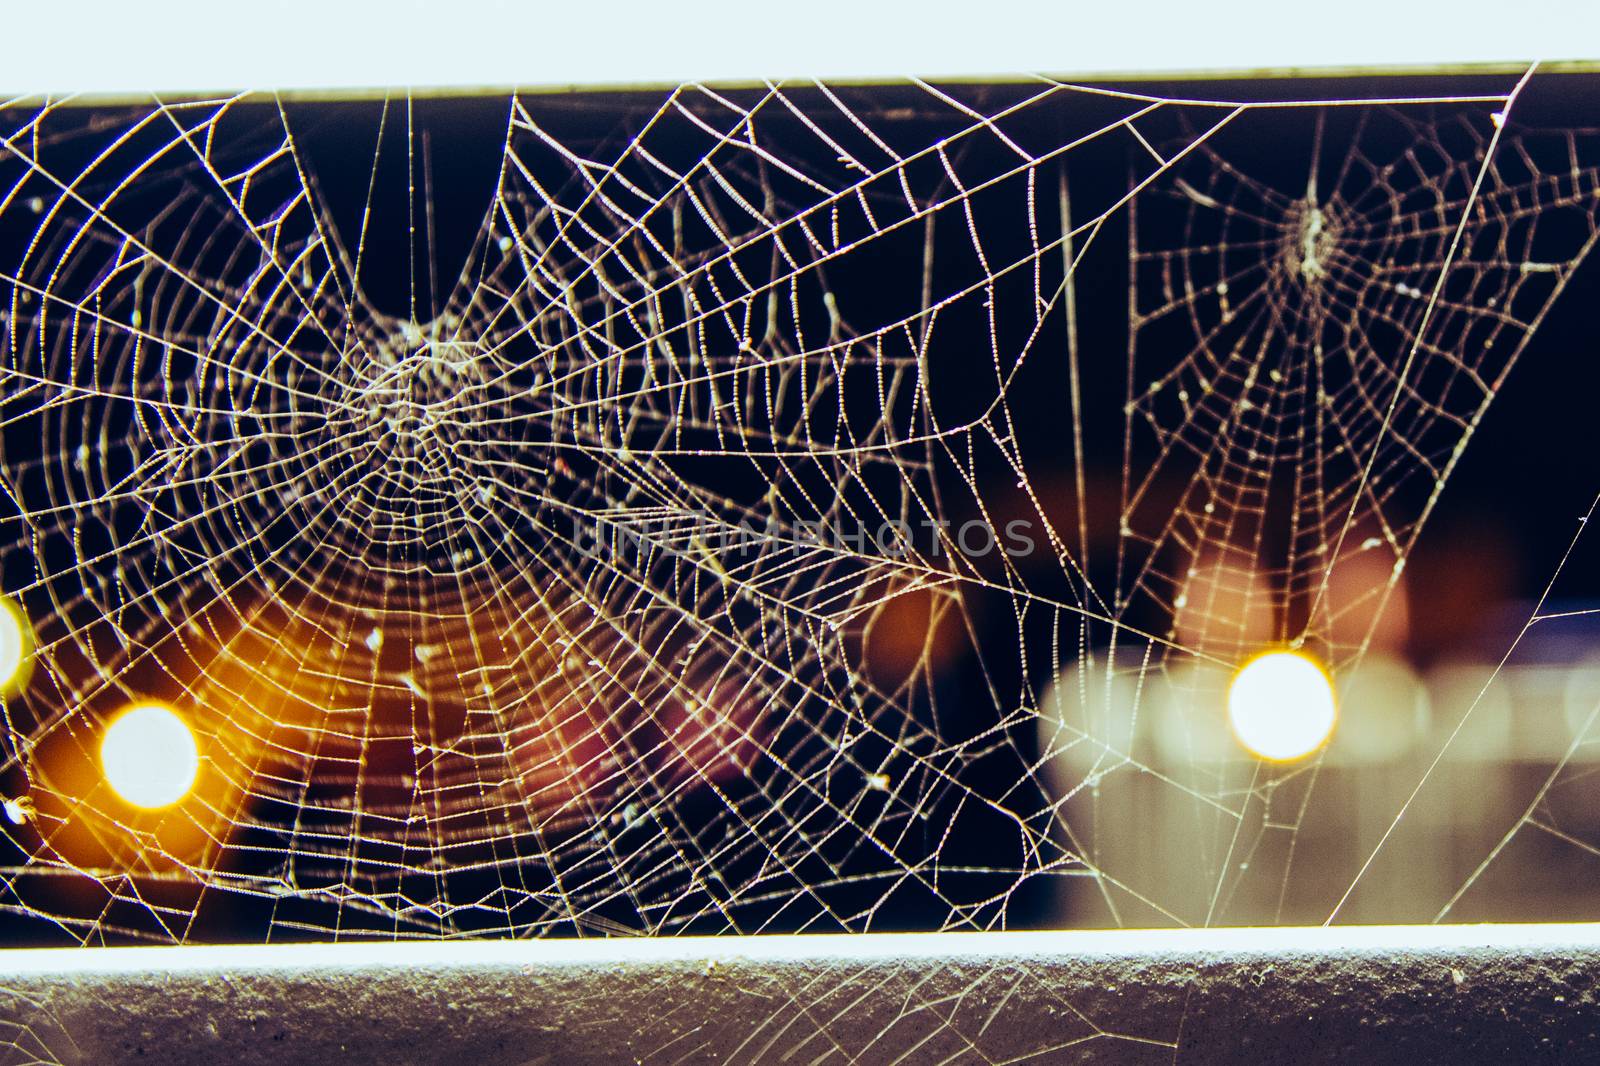 Macro of a Spiderweb at night